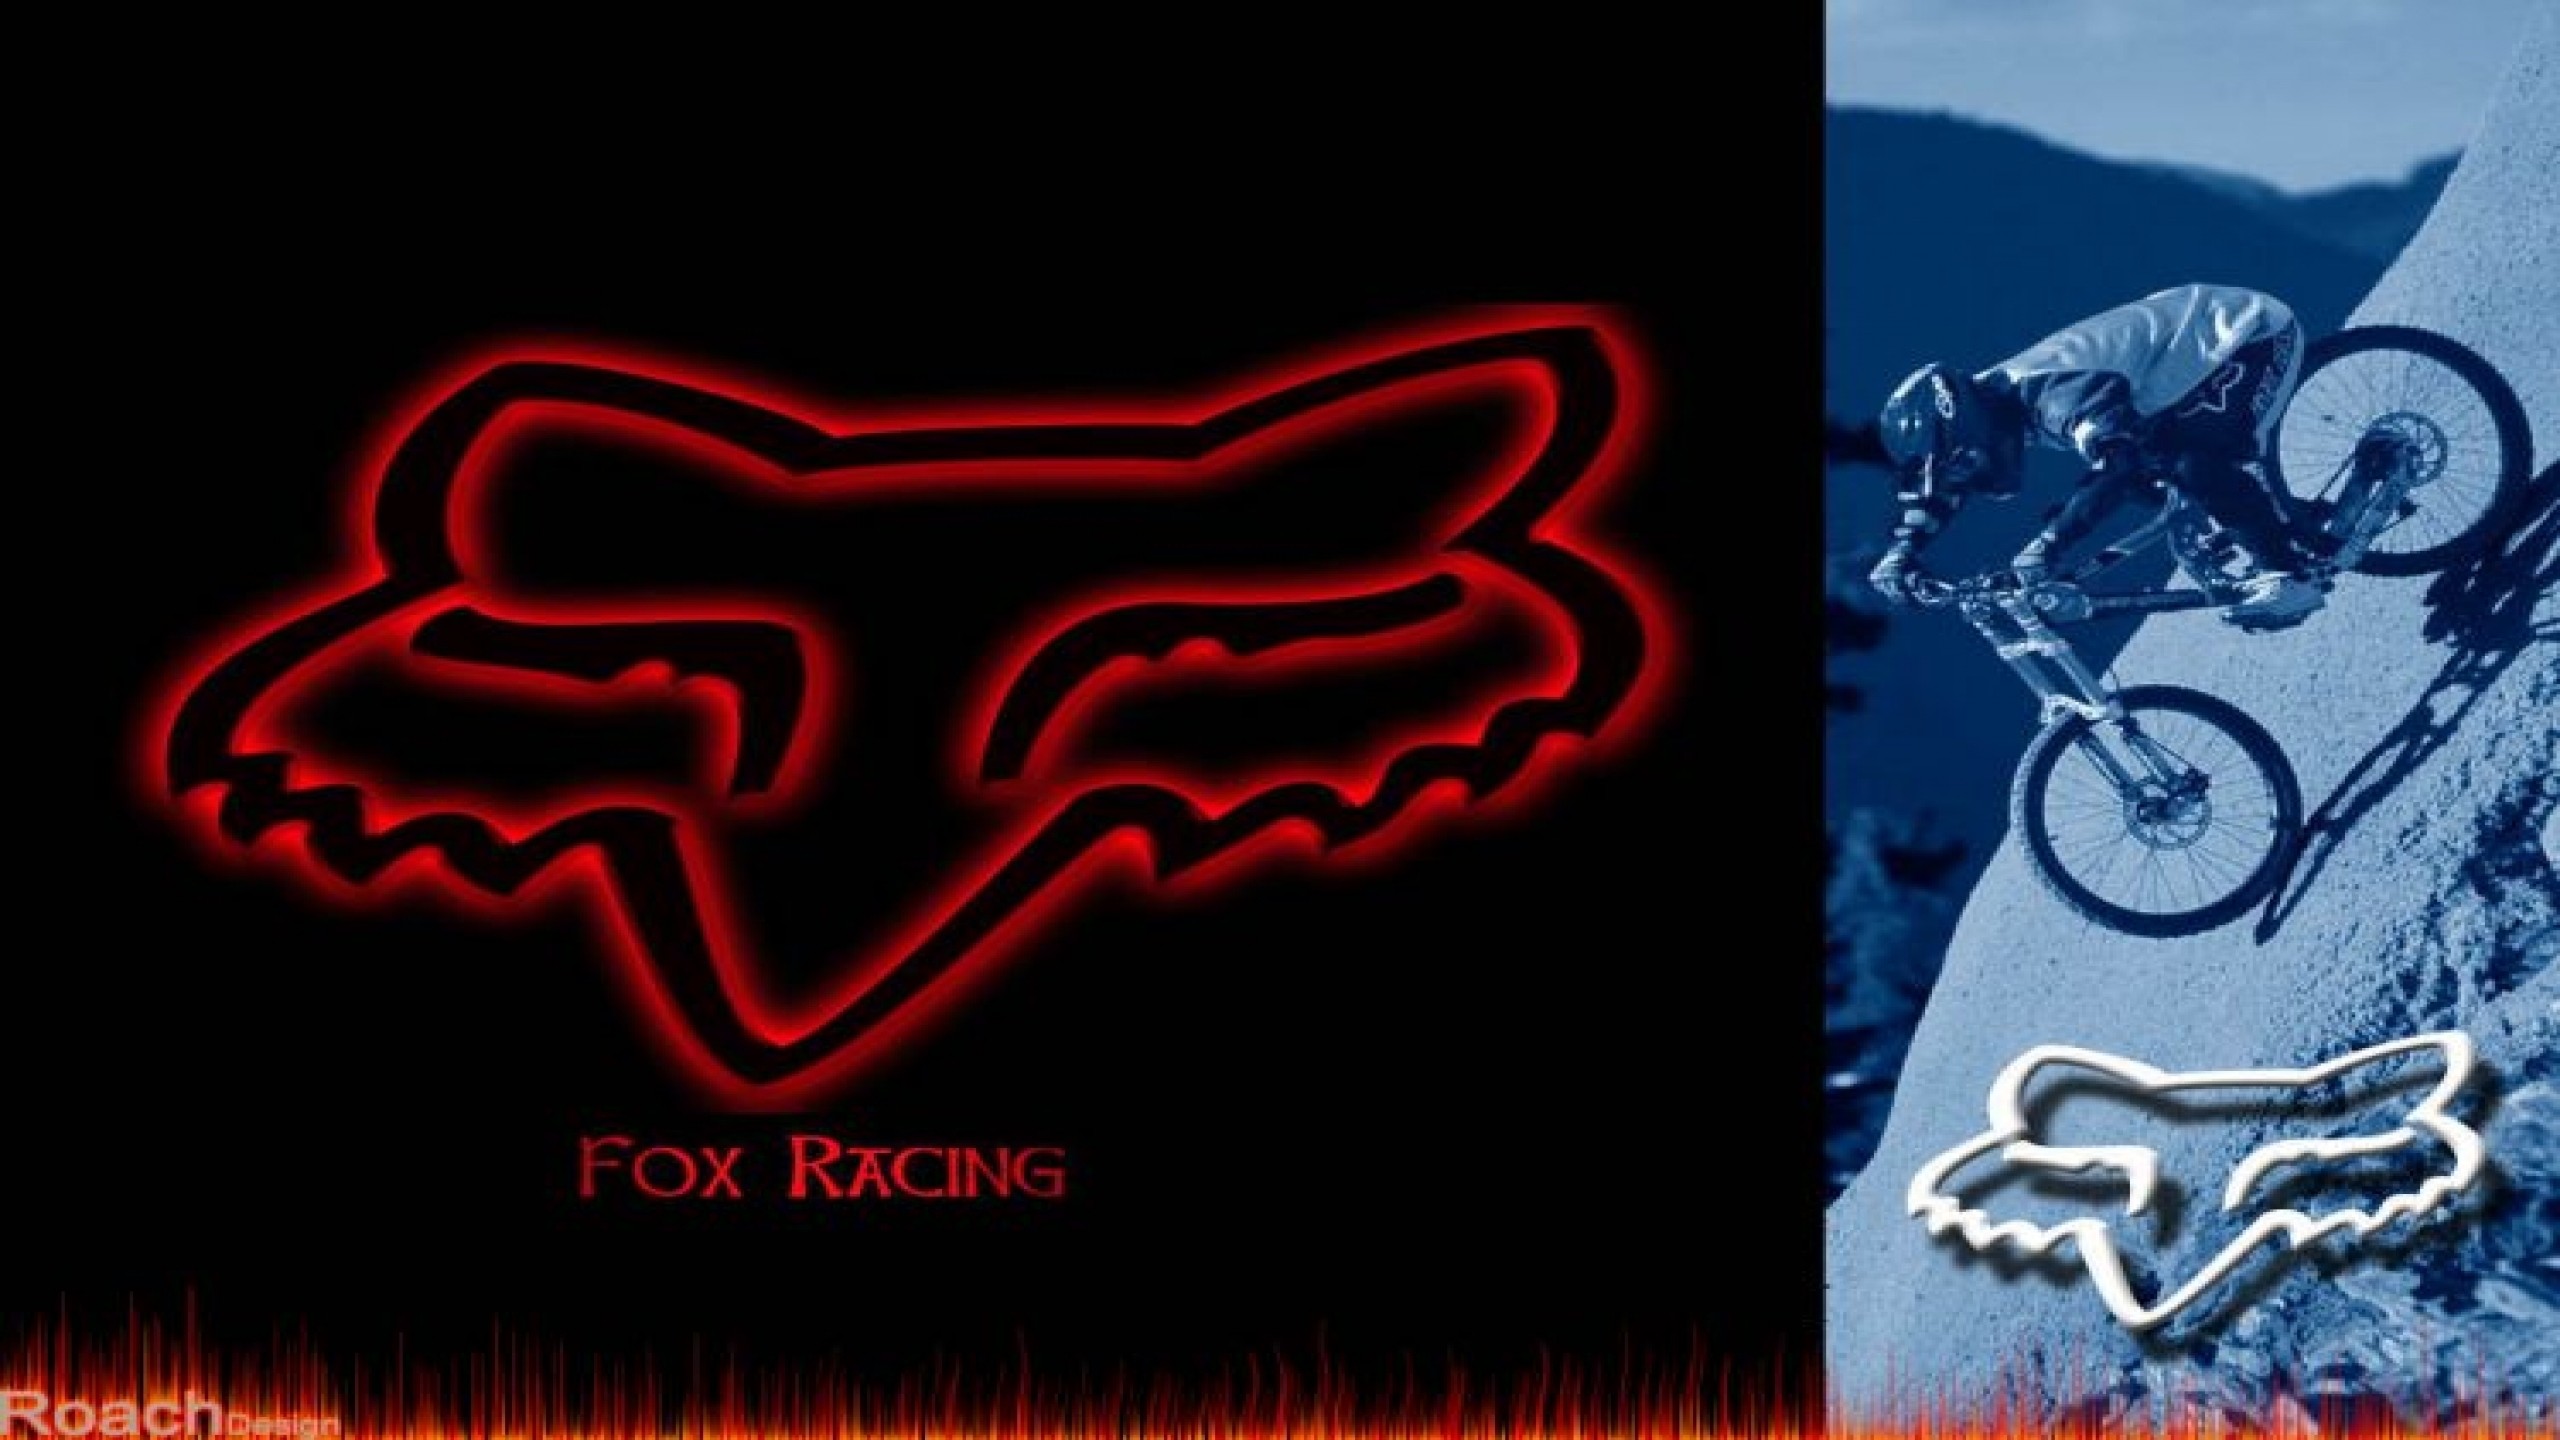 2560x1440 Free Image Fox Racing Amazing Free Download Wallpapers Hi Res